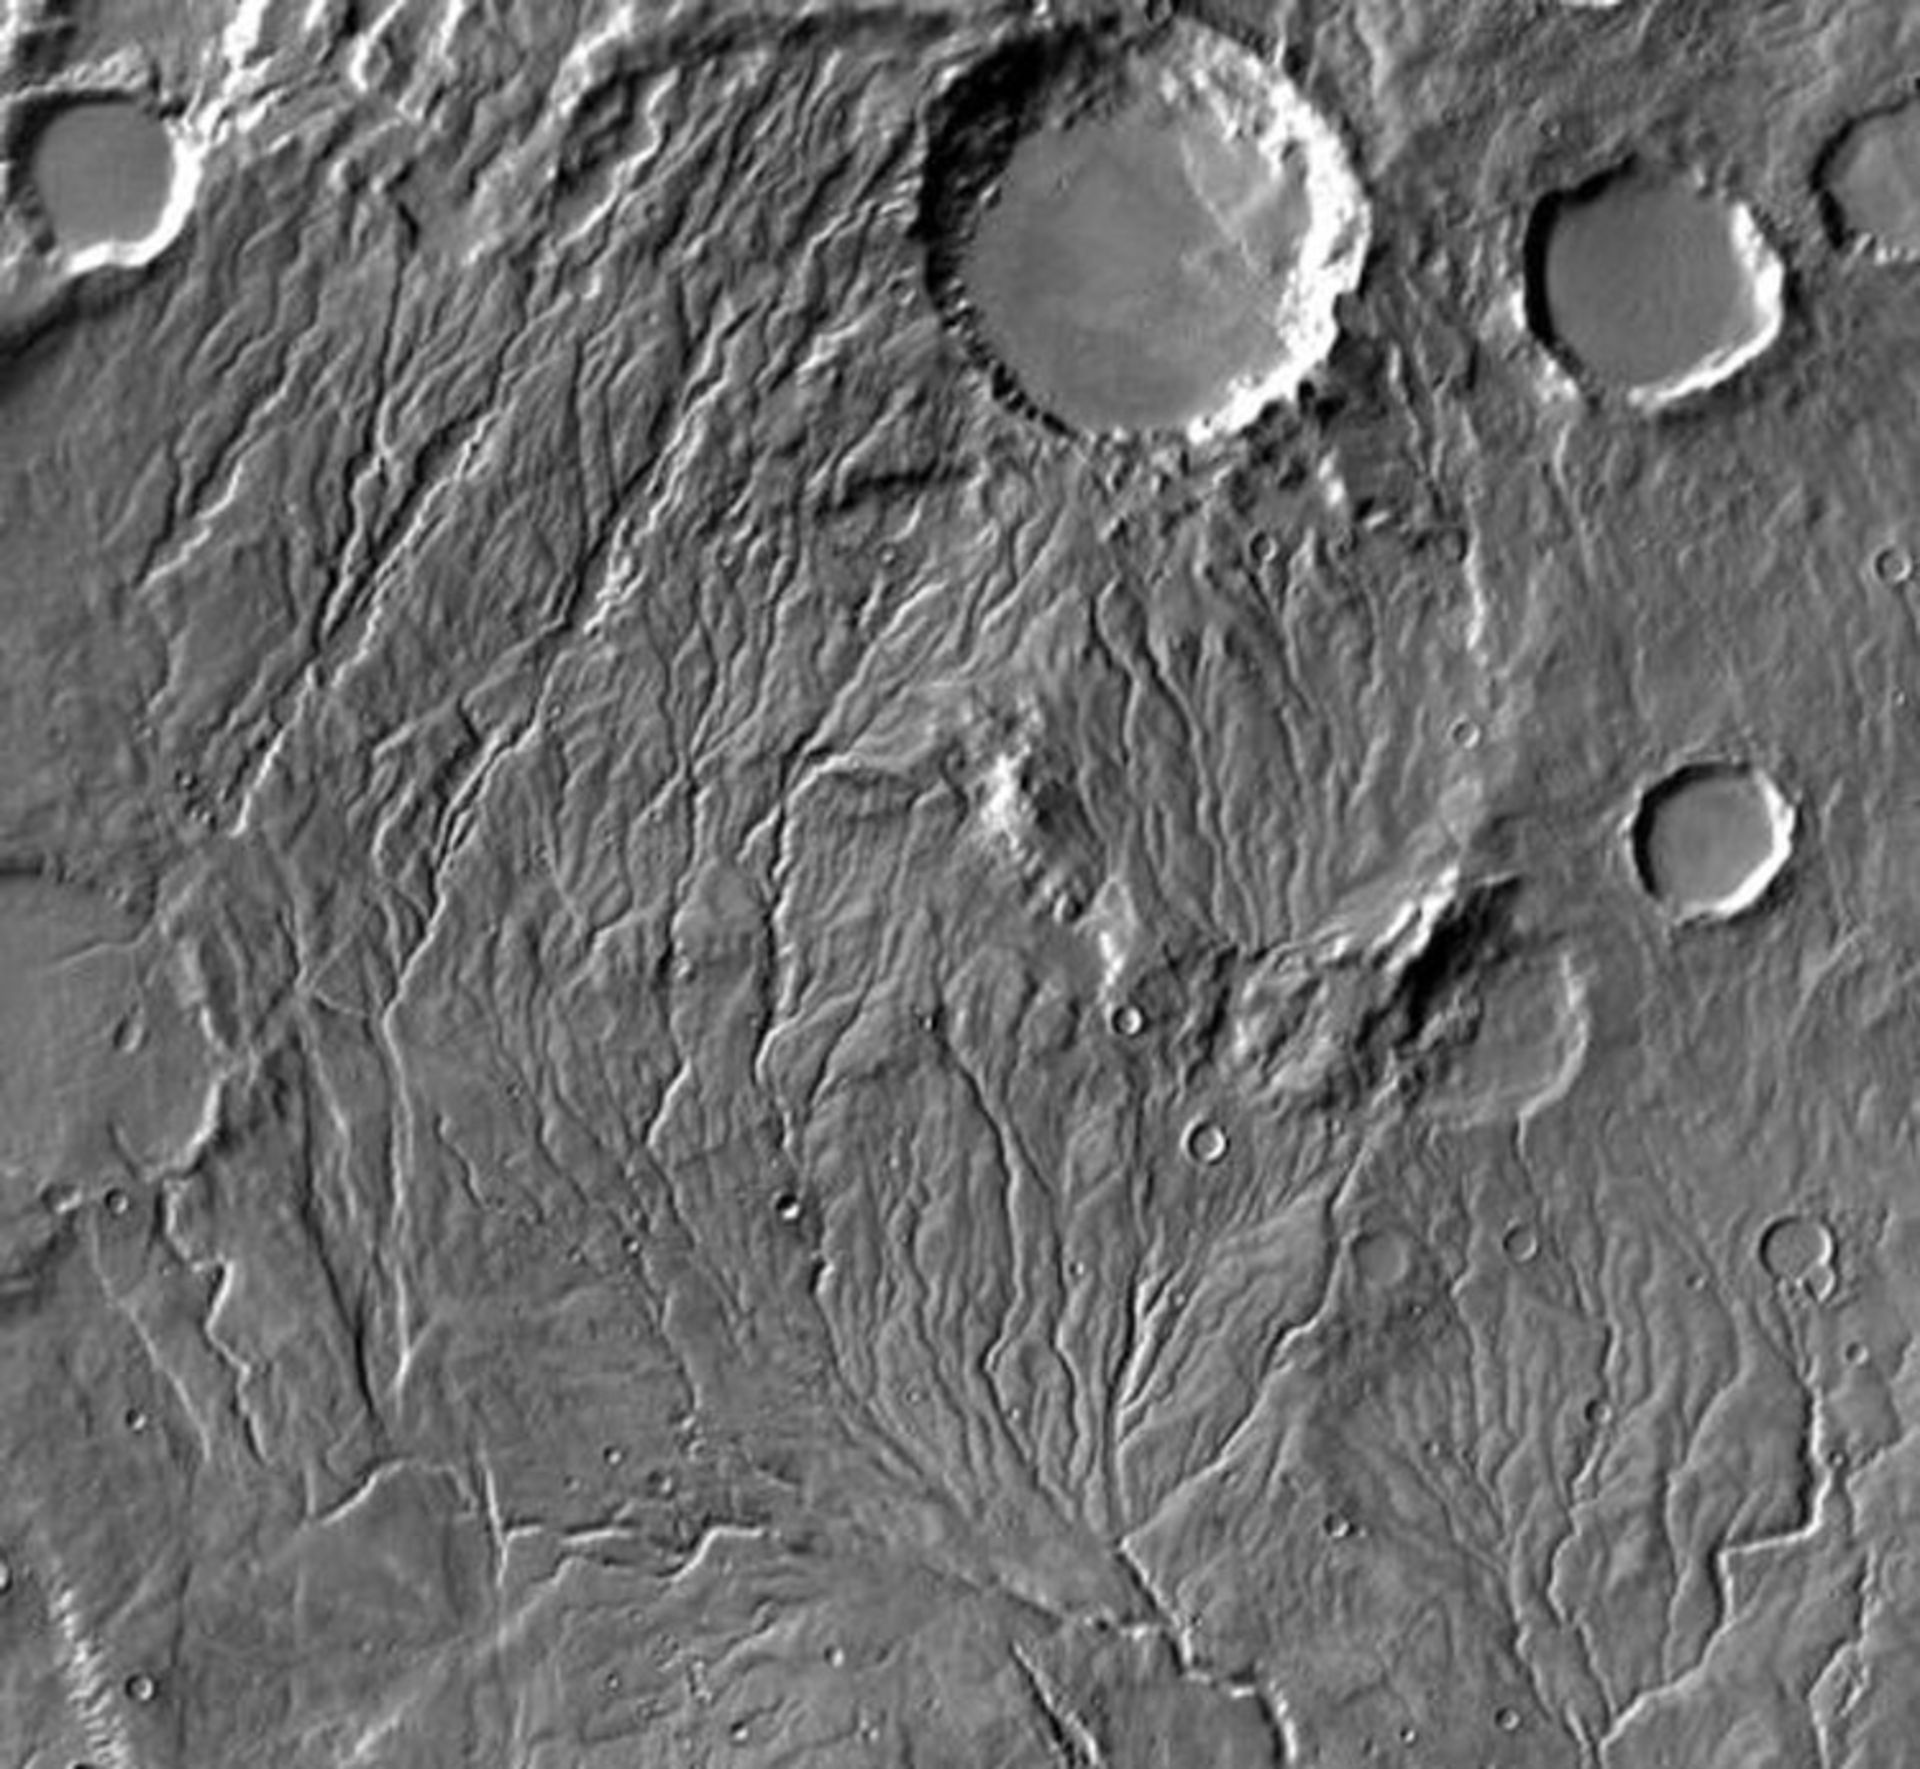 Mars'surface